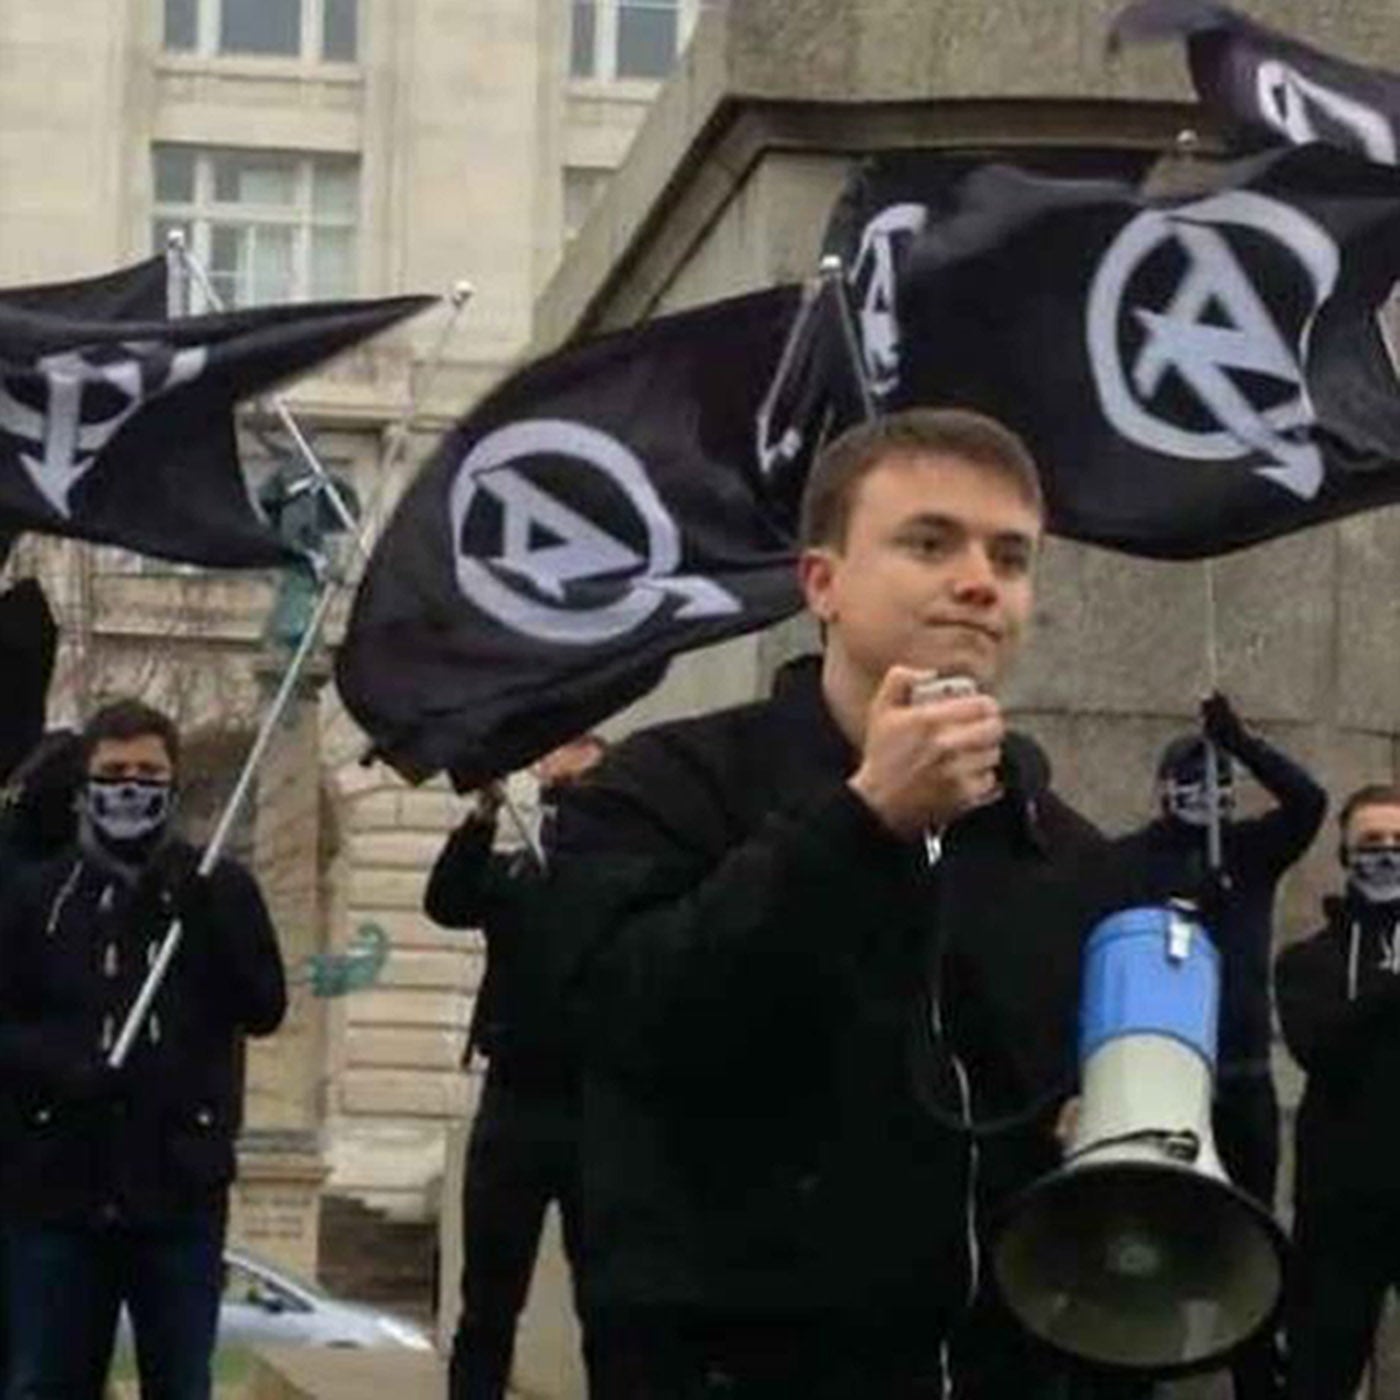 Jack Renshaw at a National Action rally